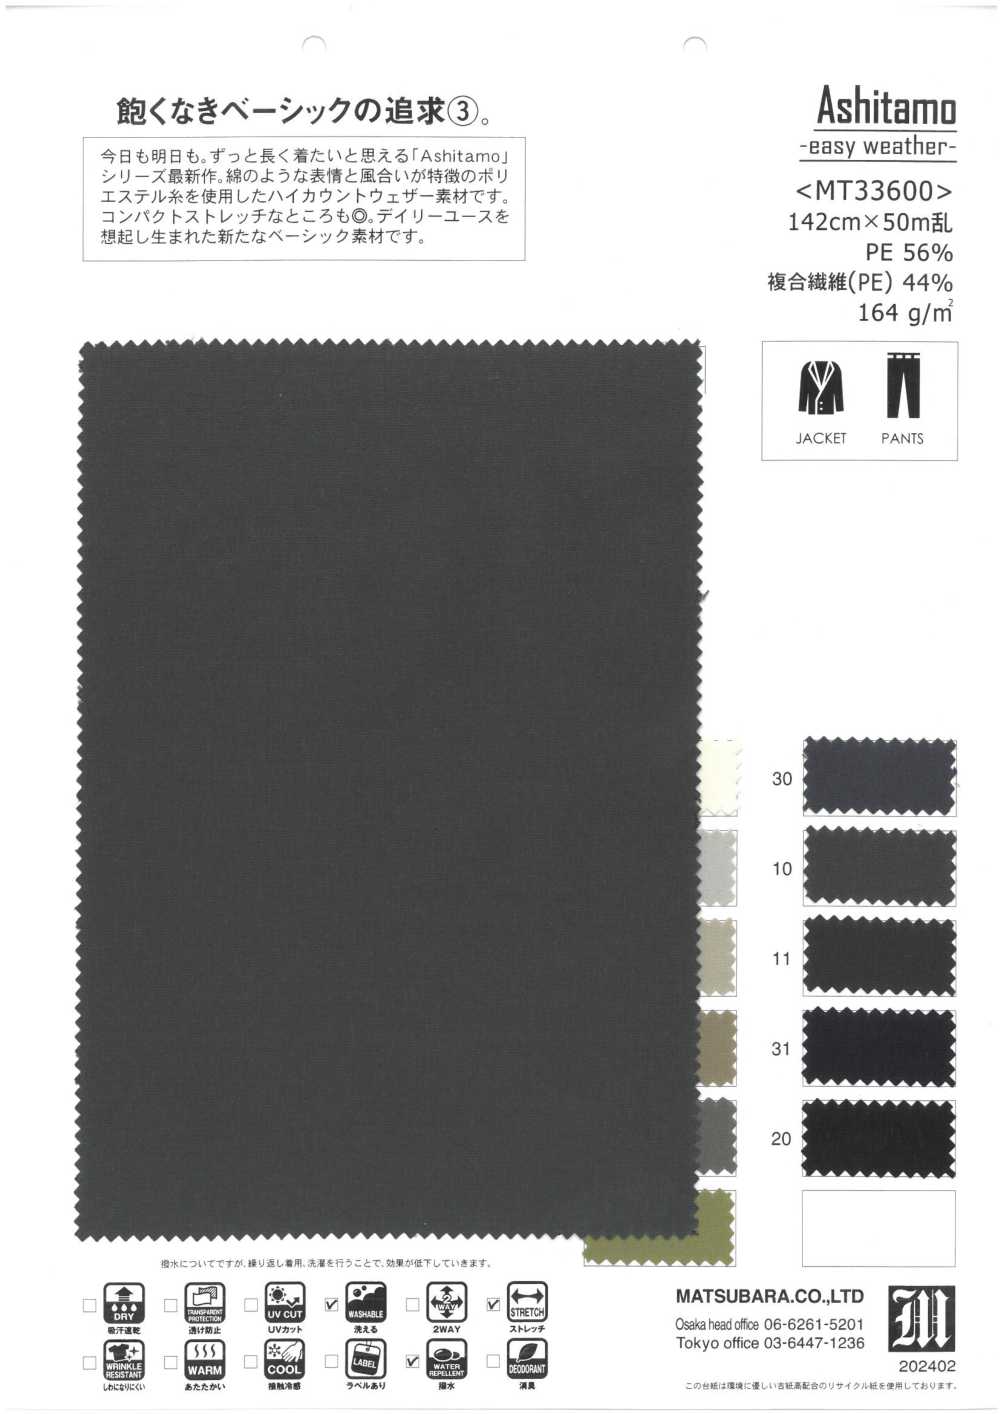 MT33600 Ashitamo -leichtes Wetter-[Textilgewebe] Matsubara